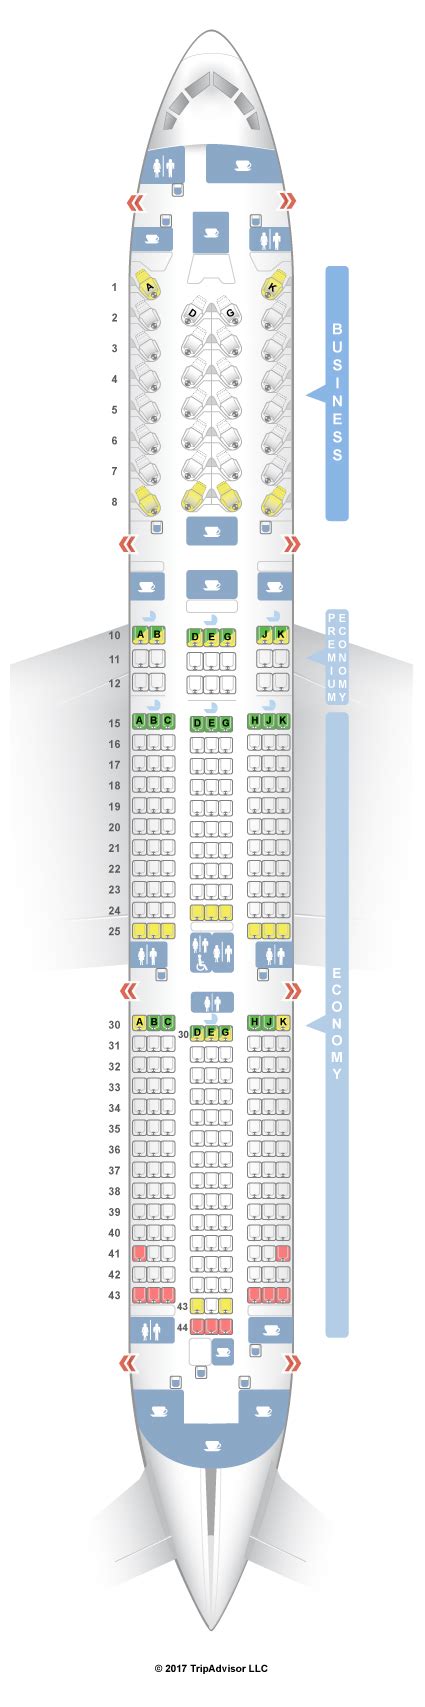 Seatguru Seat Map Air France Boeing 787 9 789